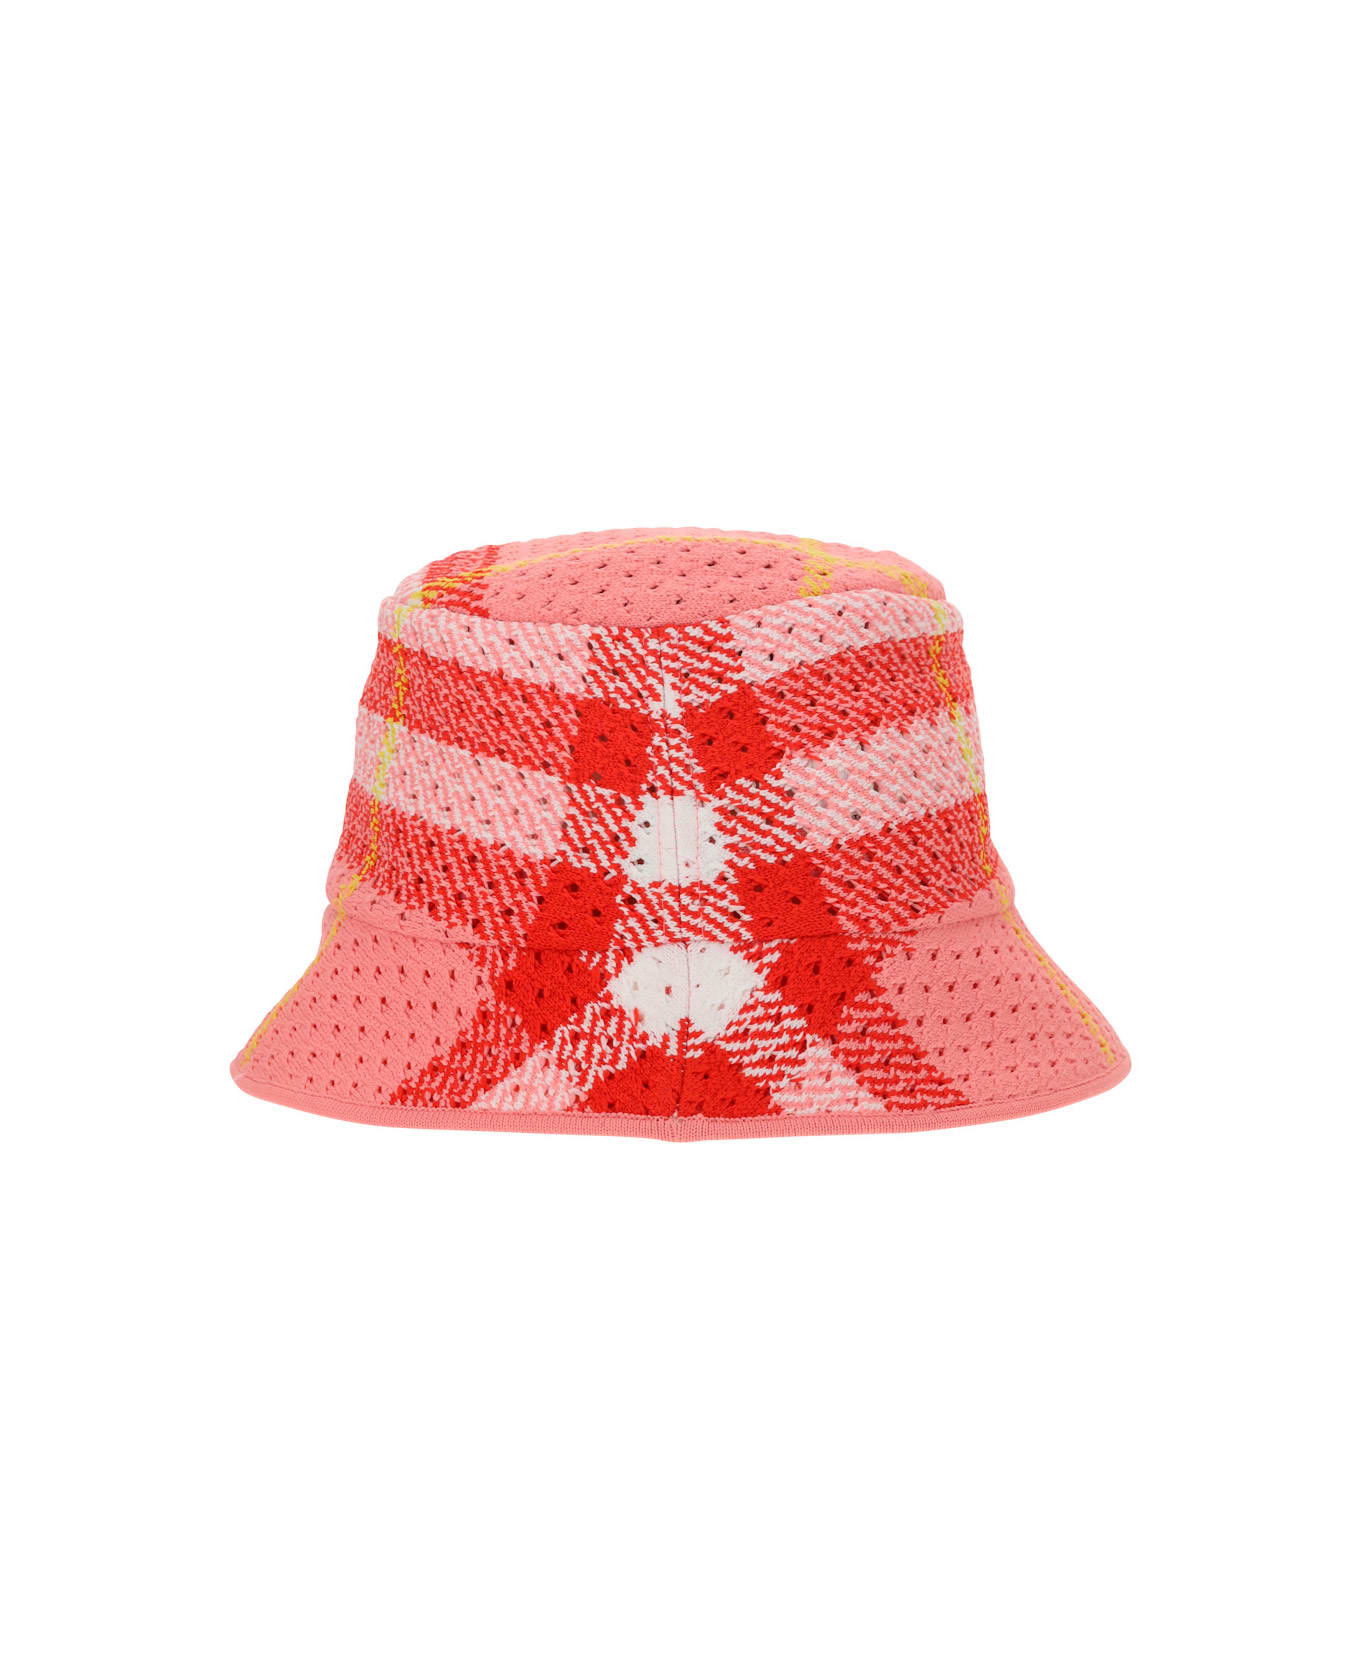 Burberry Bucket Hat - Pink Ip Check